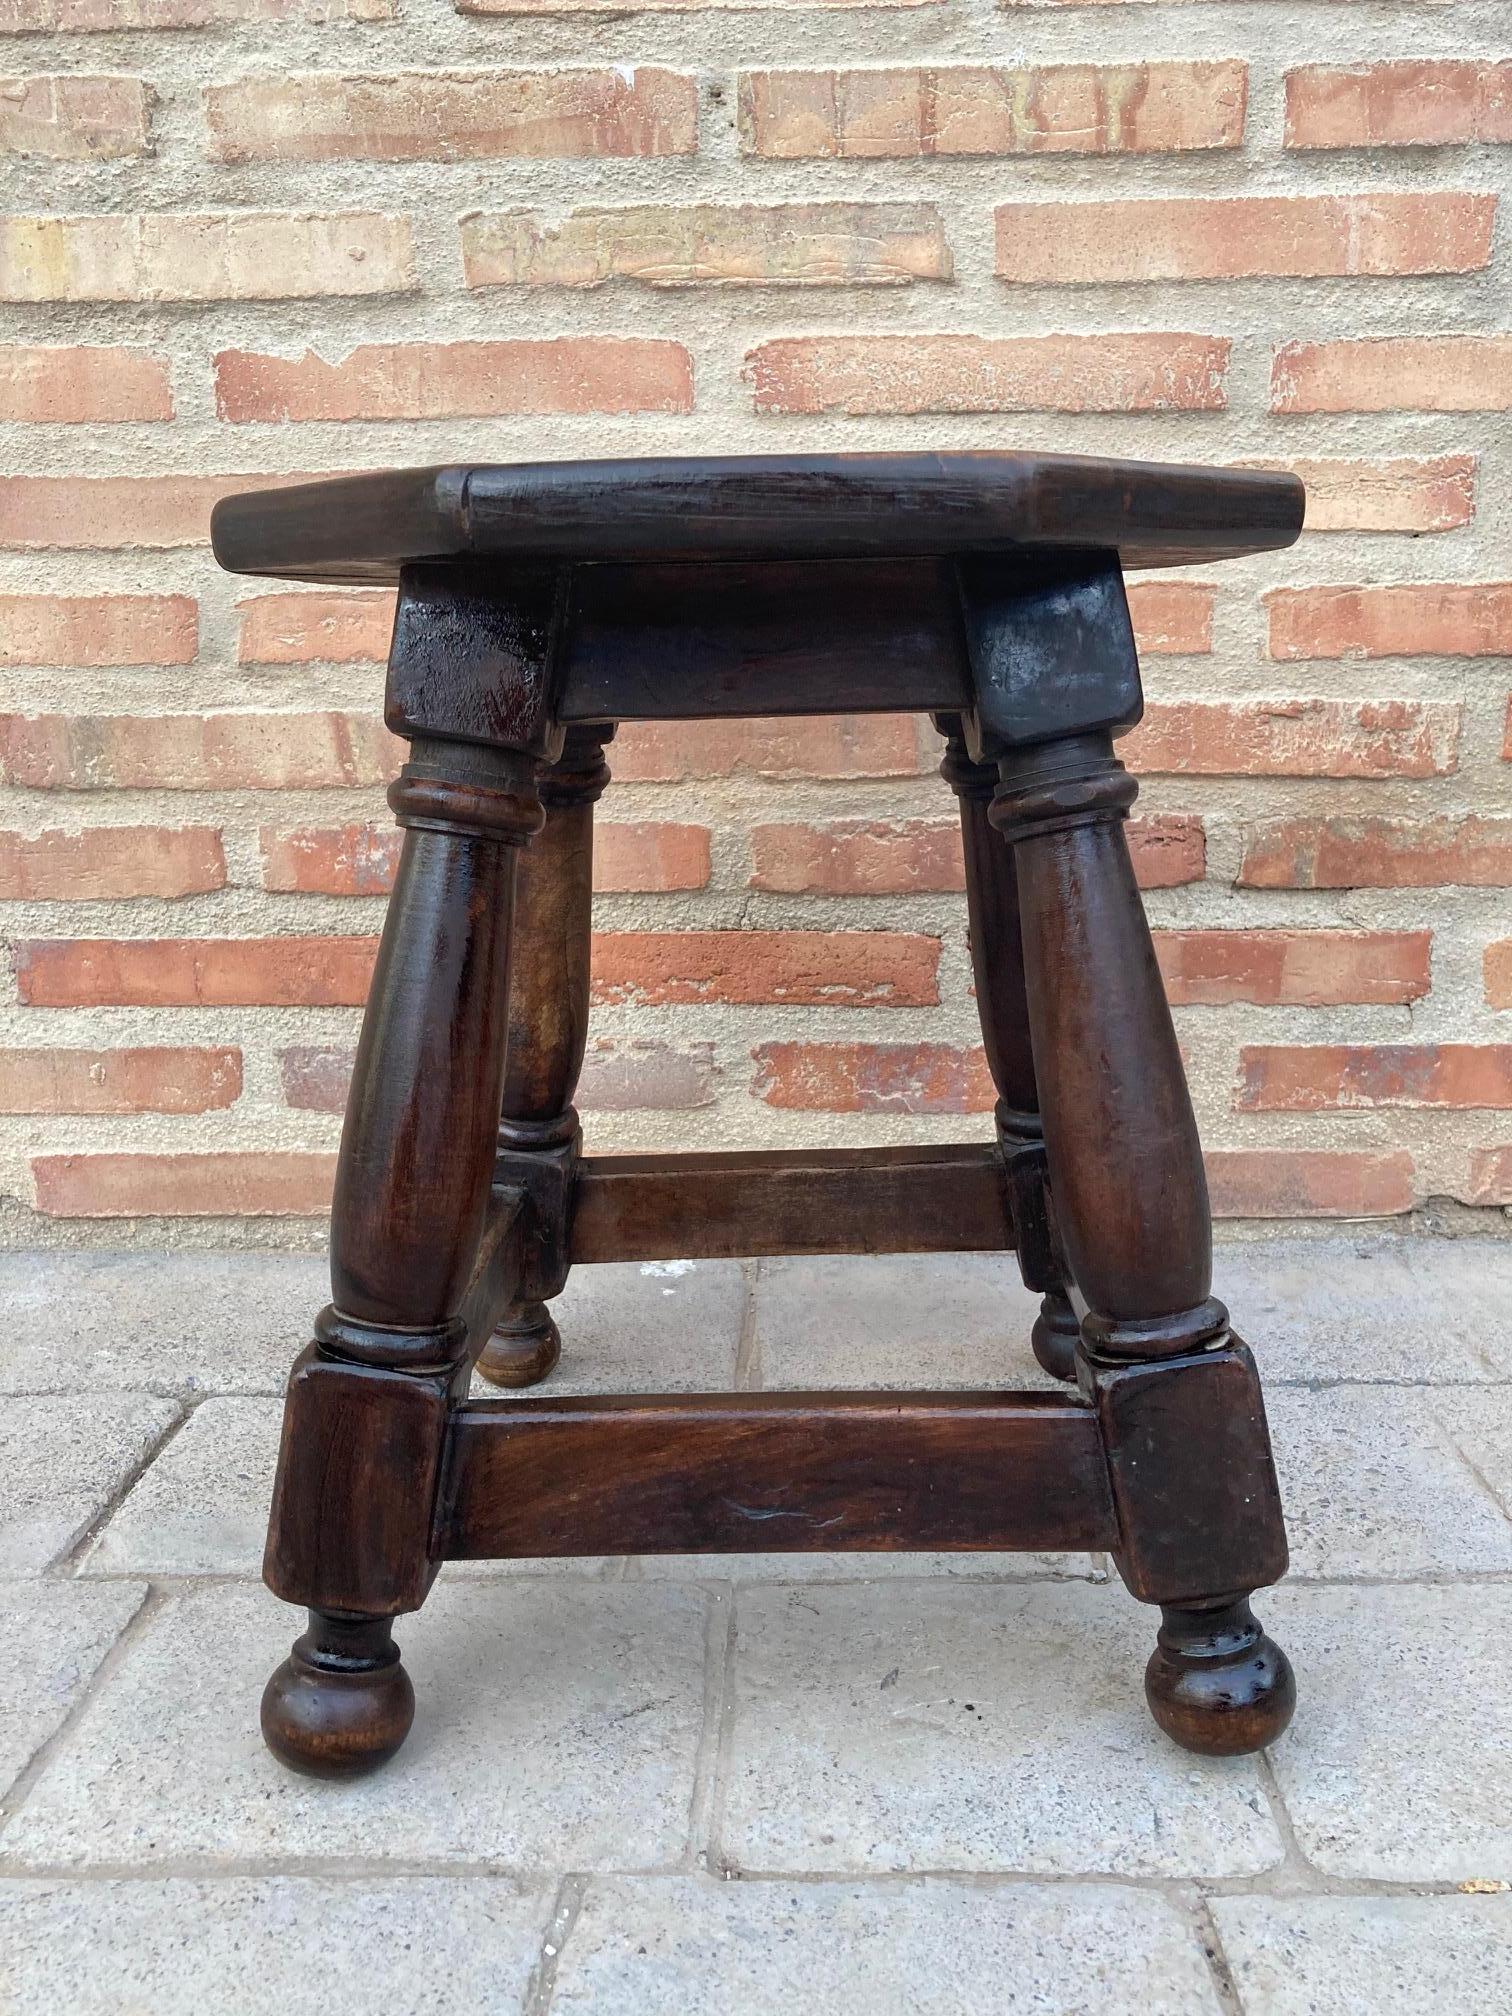 ceramic garden stool